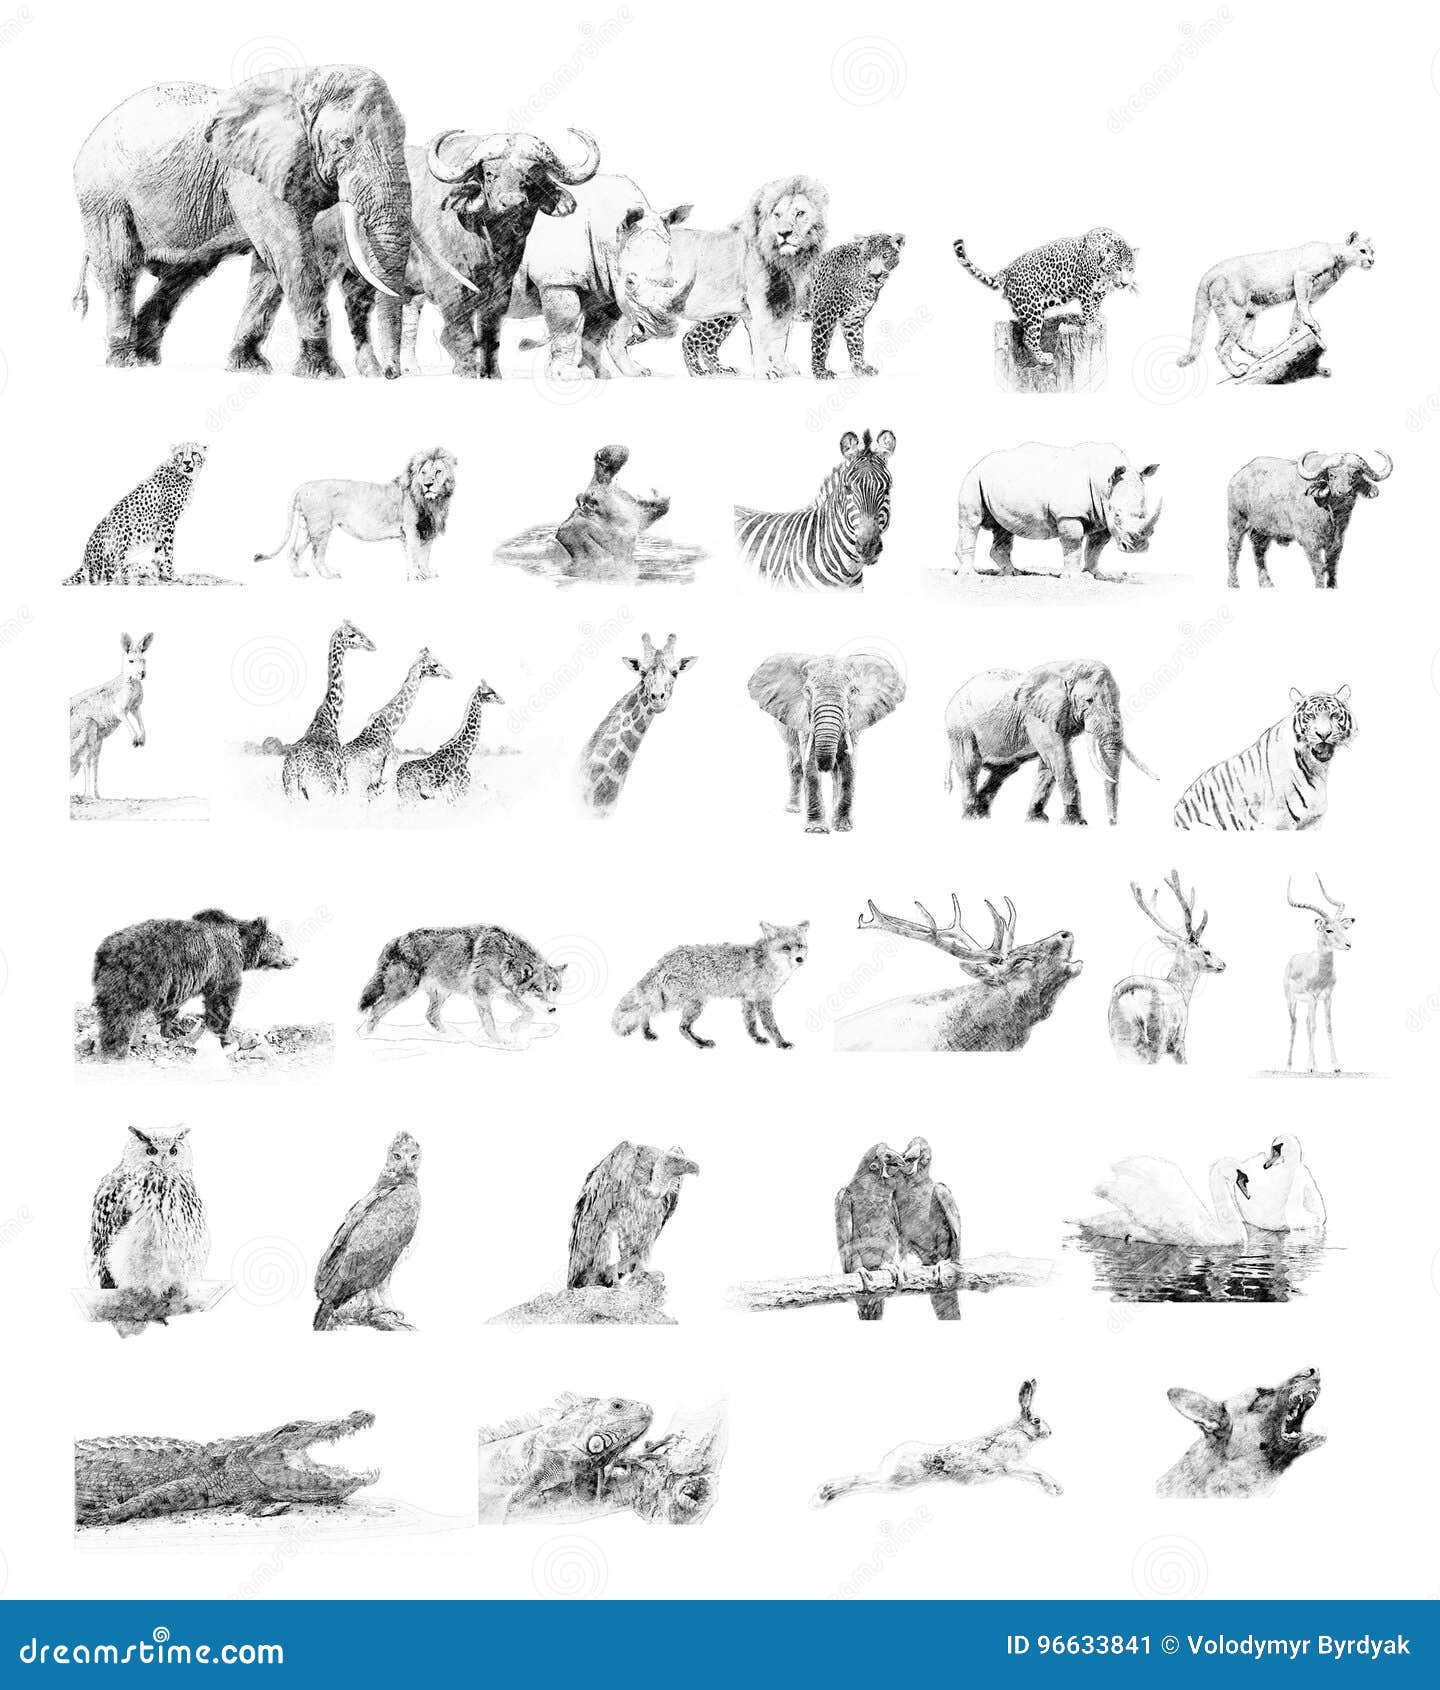 Wildlife pencil sketches on Behance